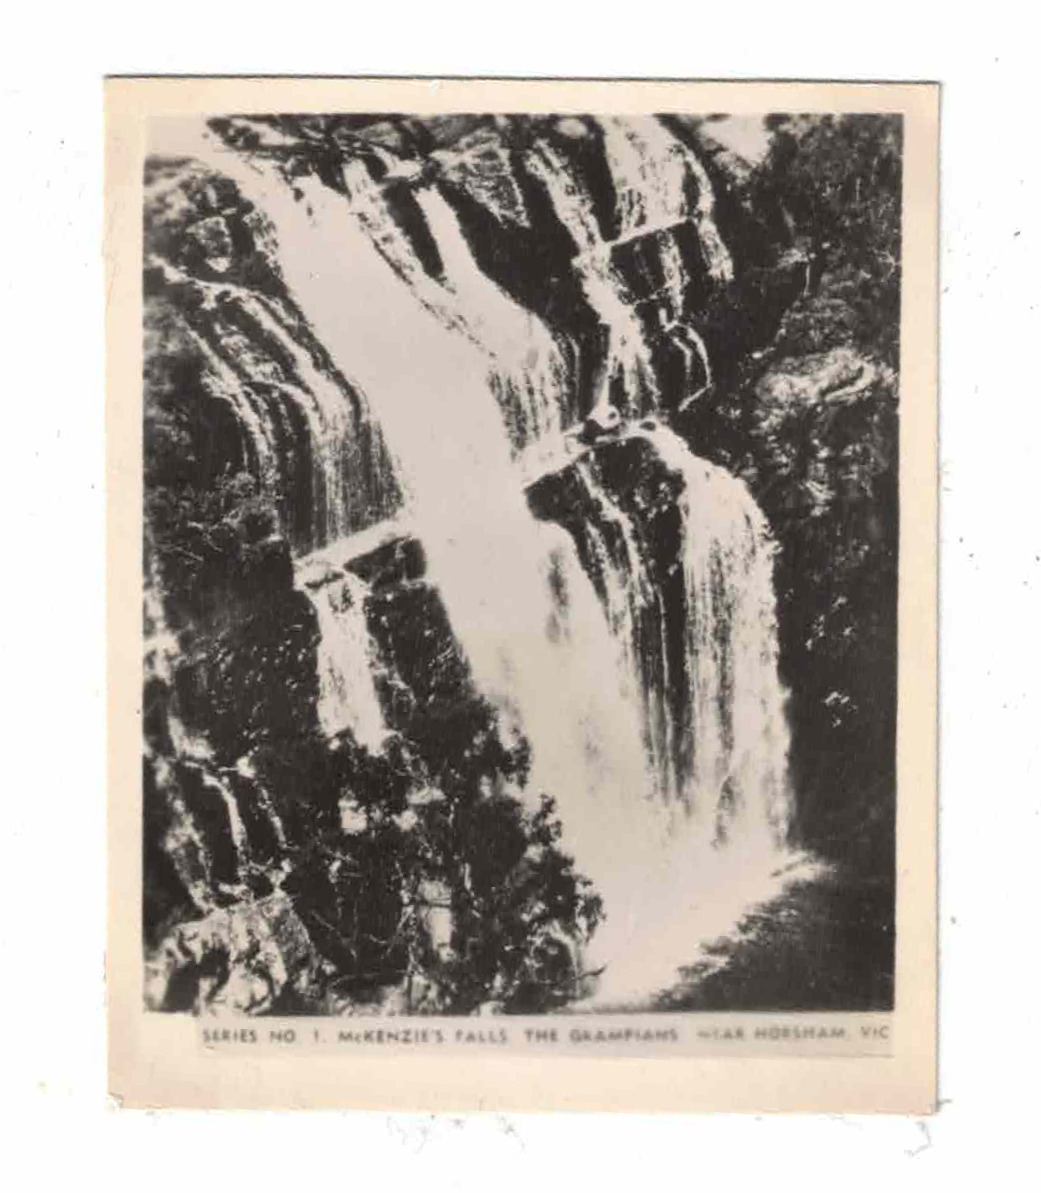 Vintage Photo c1940s McKenzies Falls, The Grampians. Vic. Australia. Series No.1